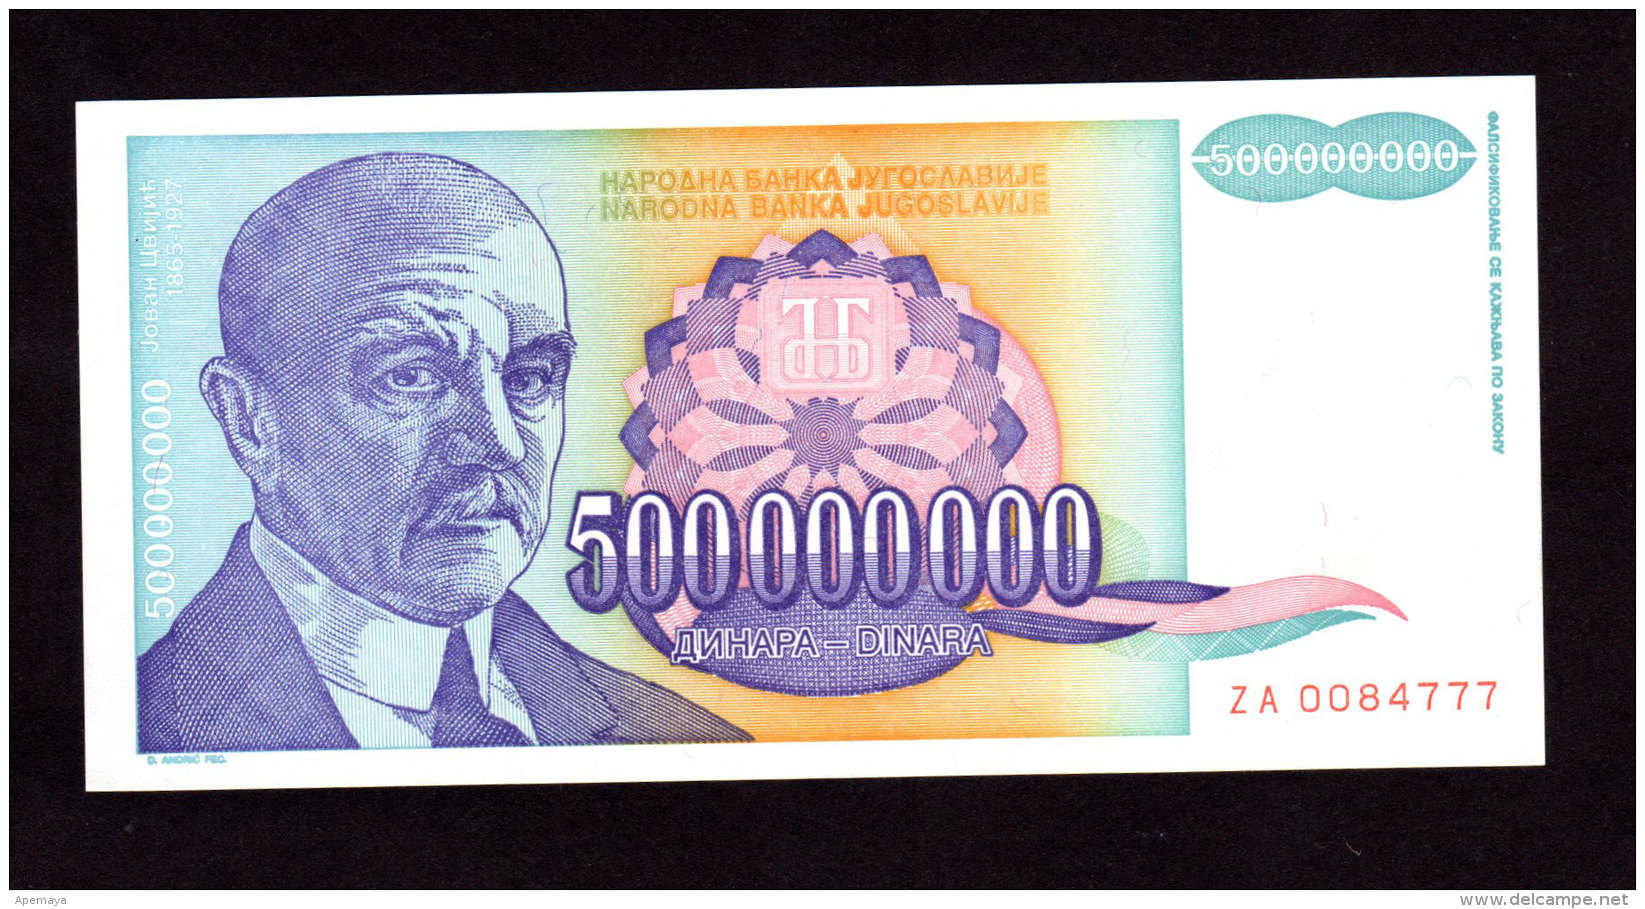 Replacement. Jugoslavia 500000000 Dinara ZA 1993. UNC!!!! - Yugoslavia